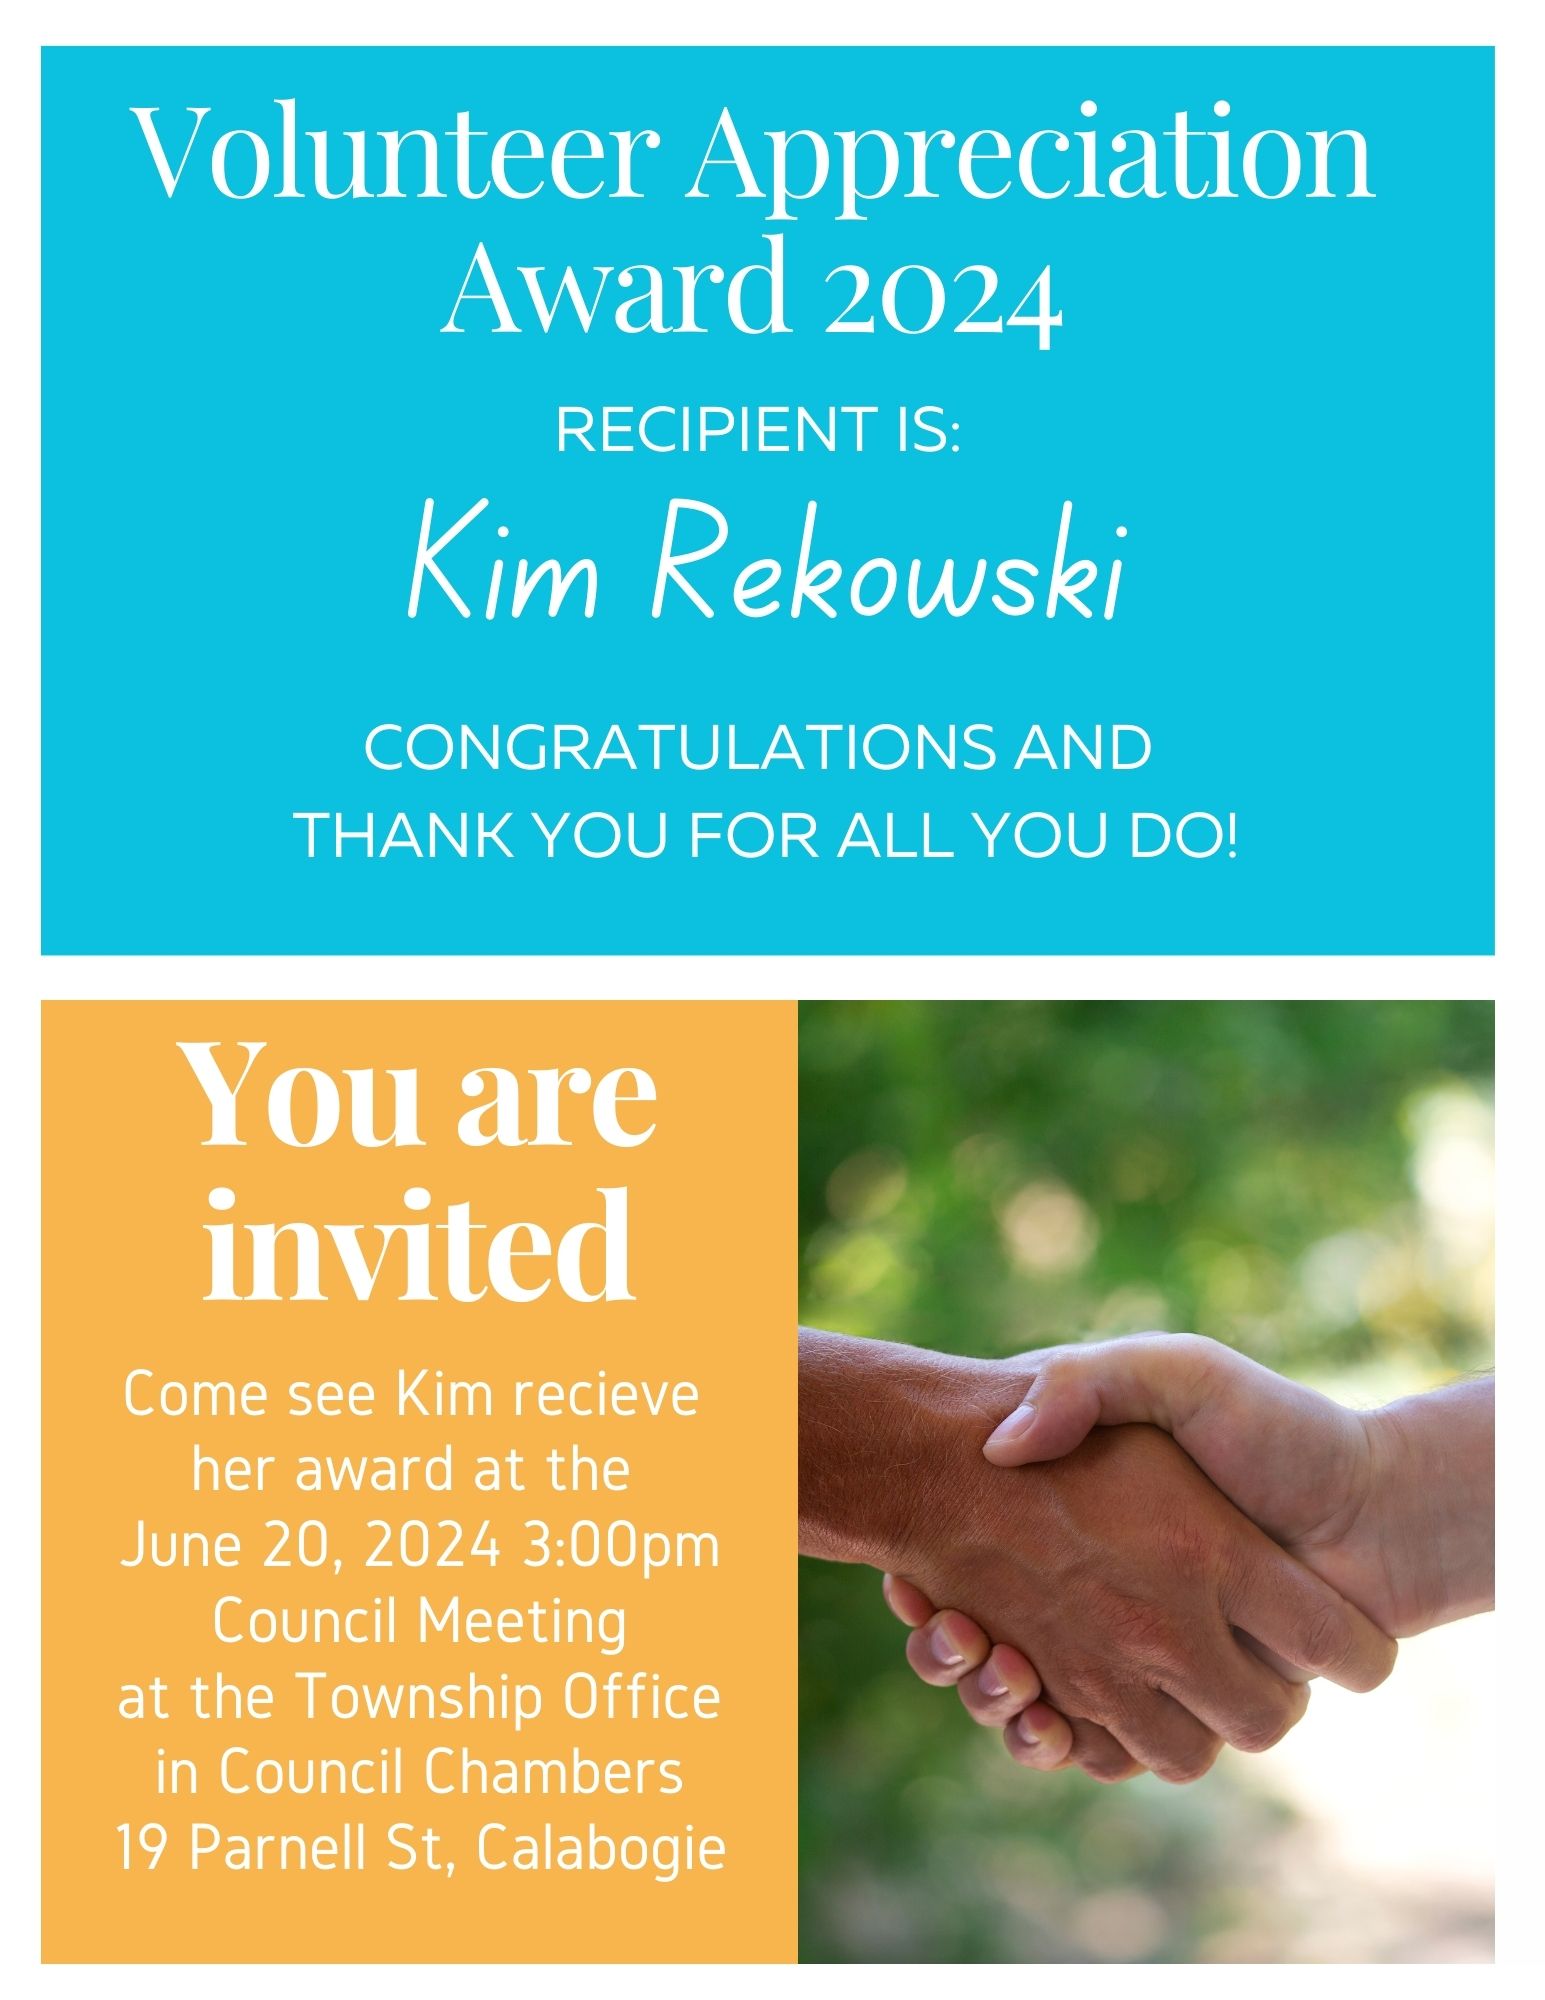 volunteer appreciation awards 2024 recipient is Kim Rekowski